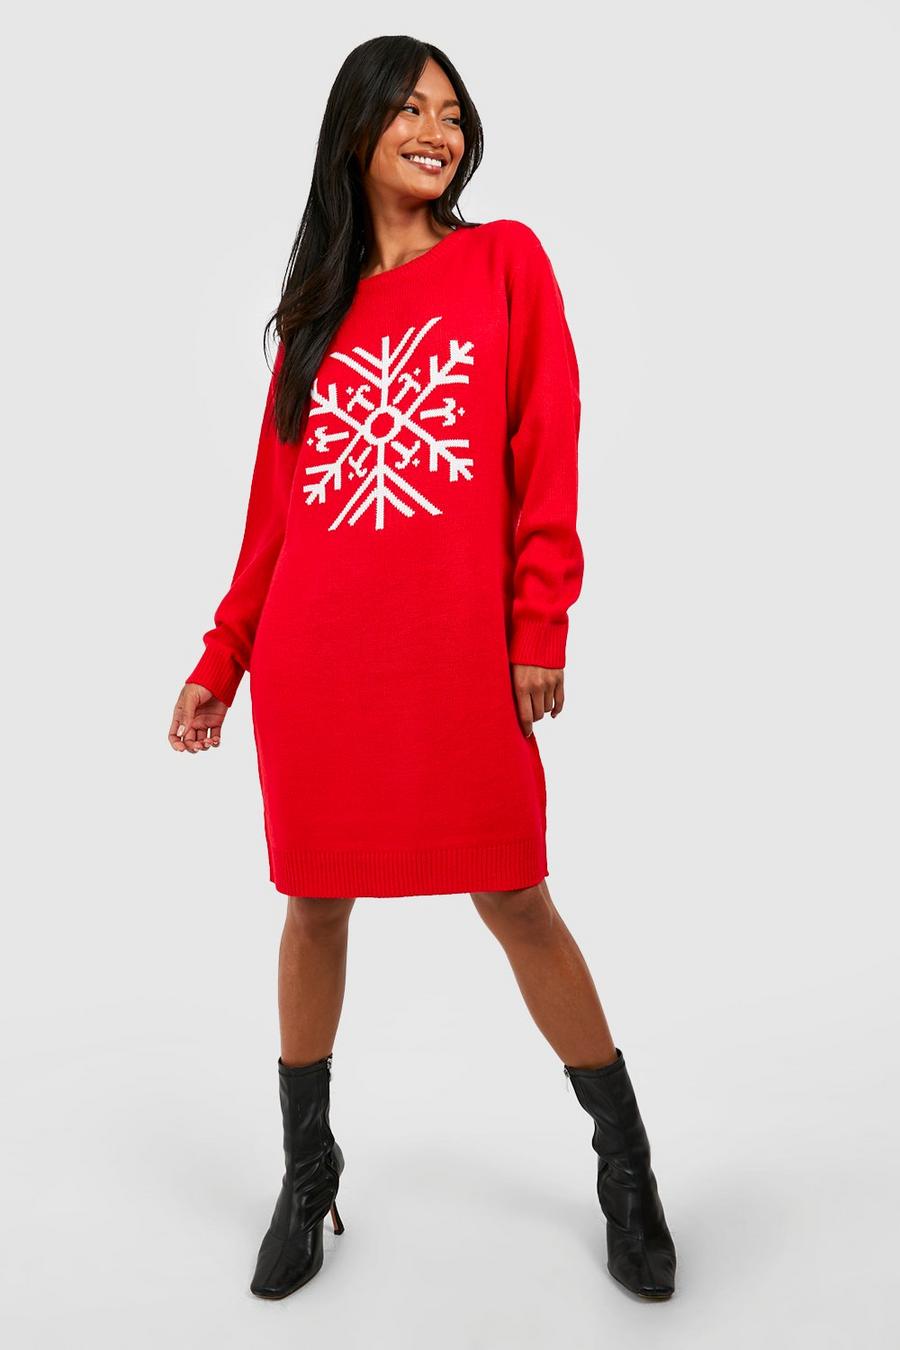 Red Snowflake Chirstmas Jumper Dress